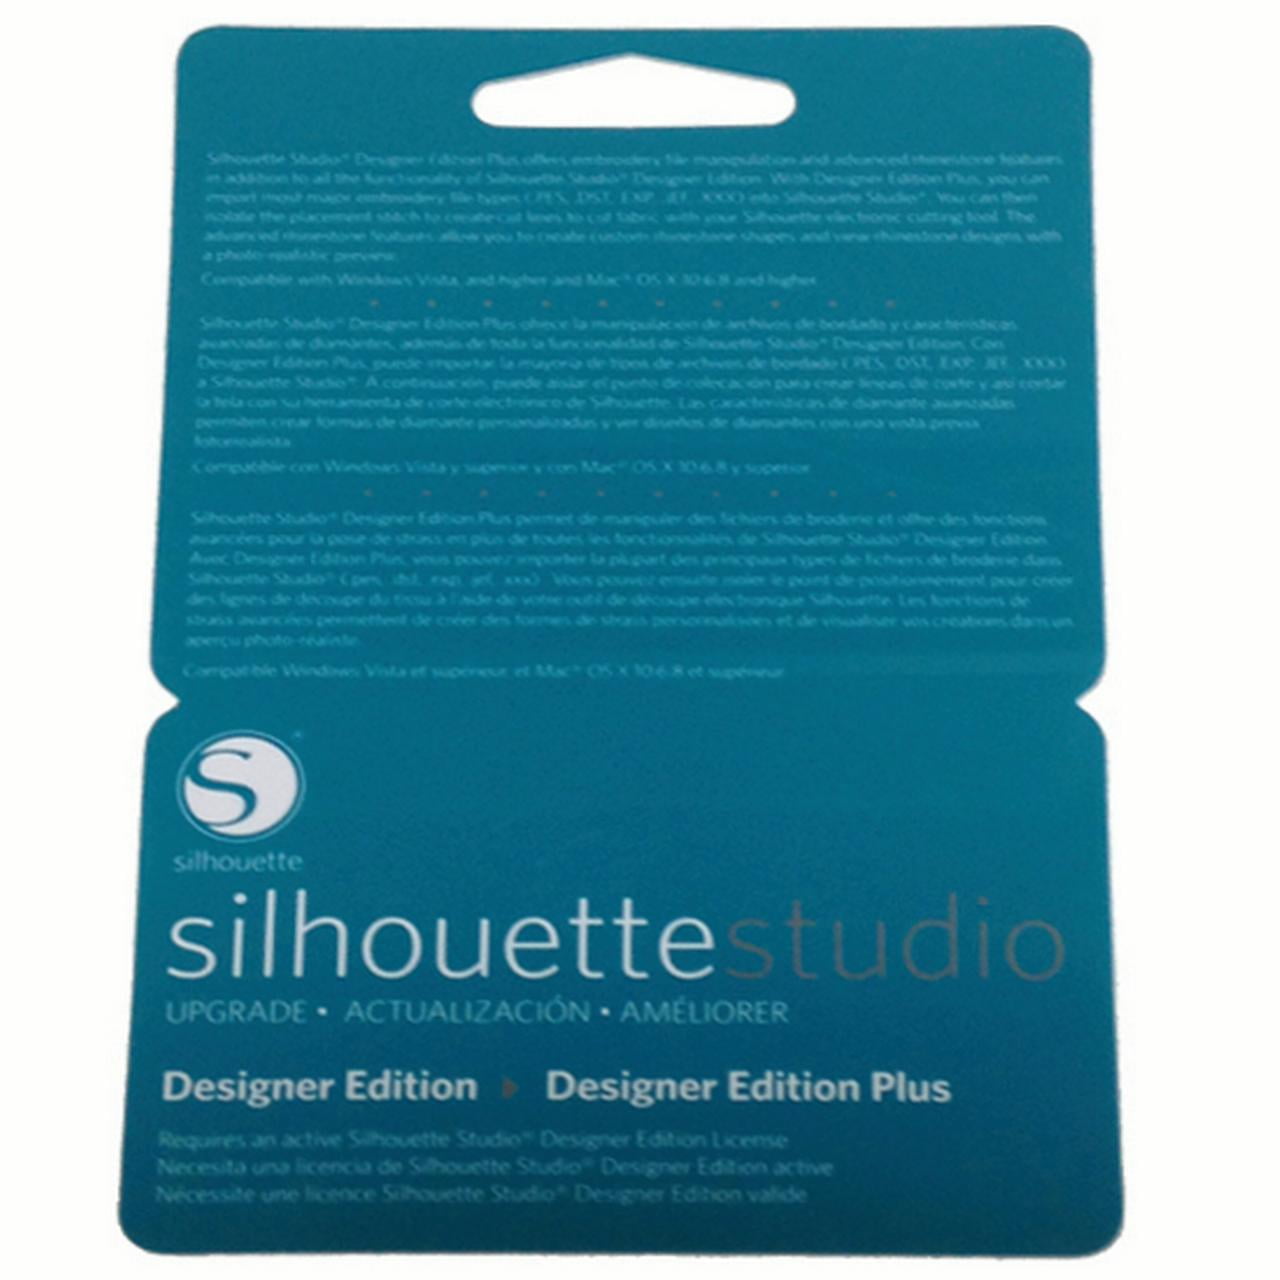 silhouette studio designer edition code